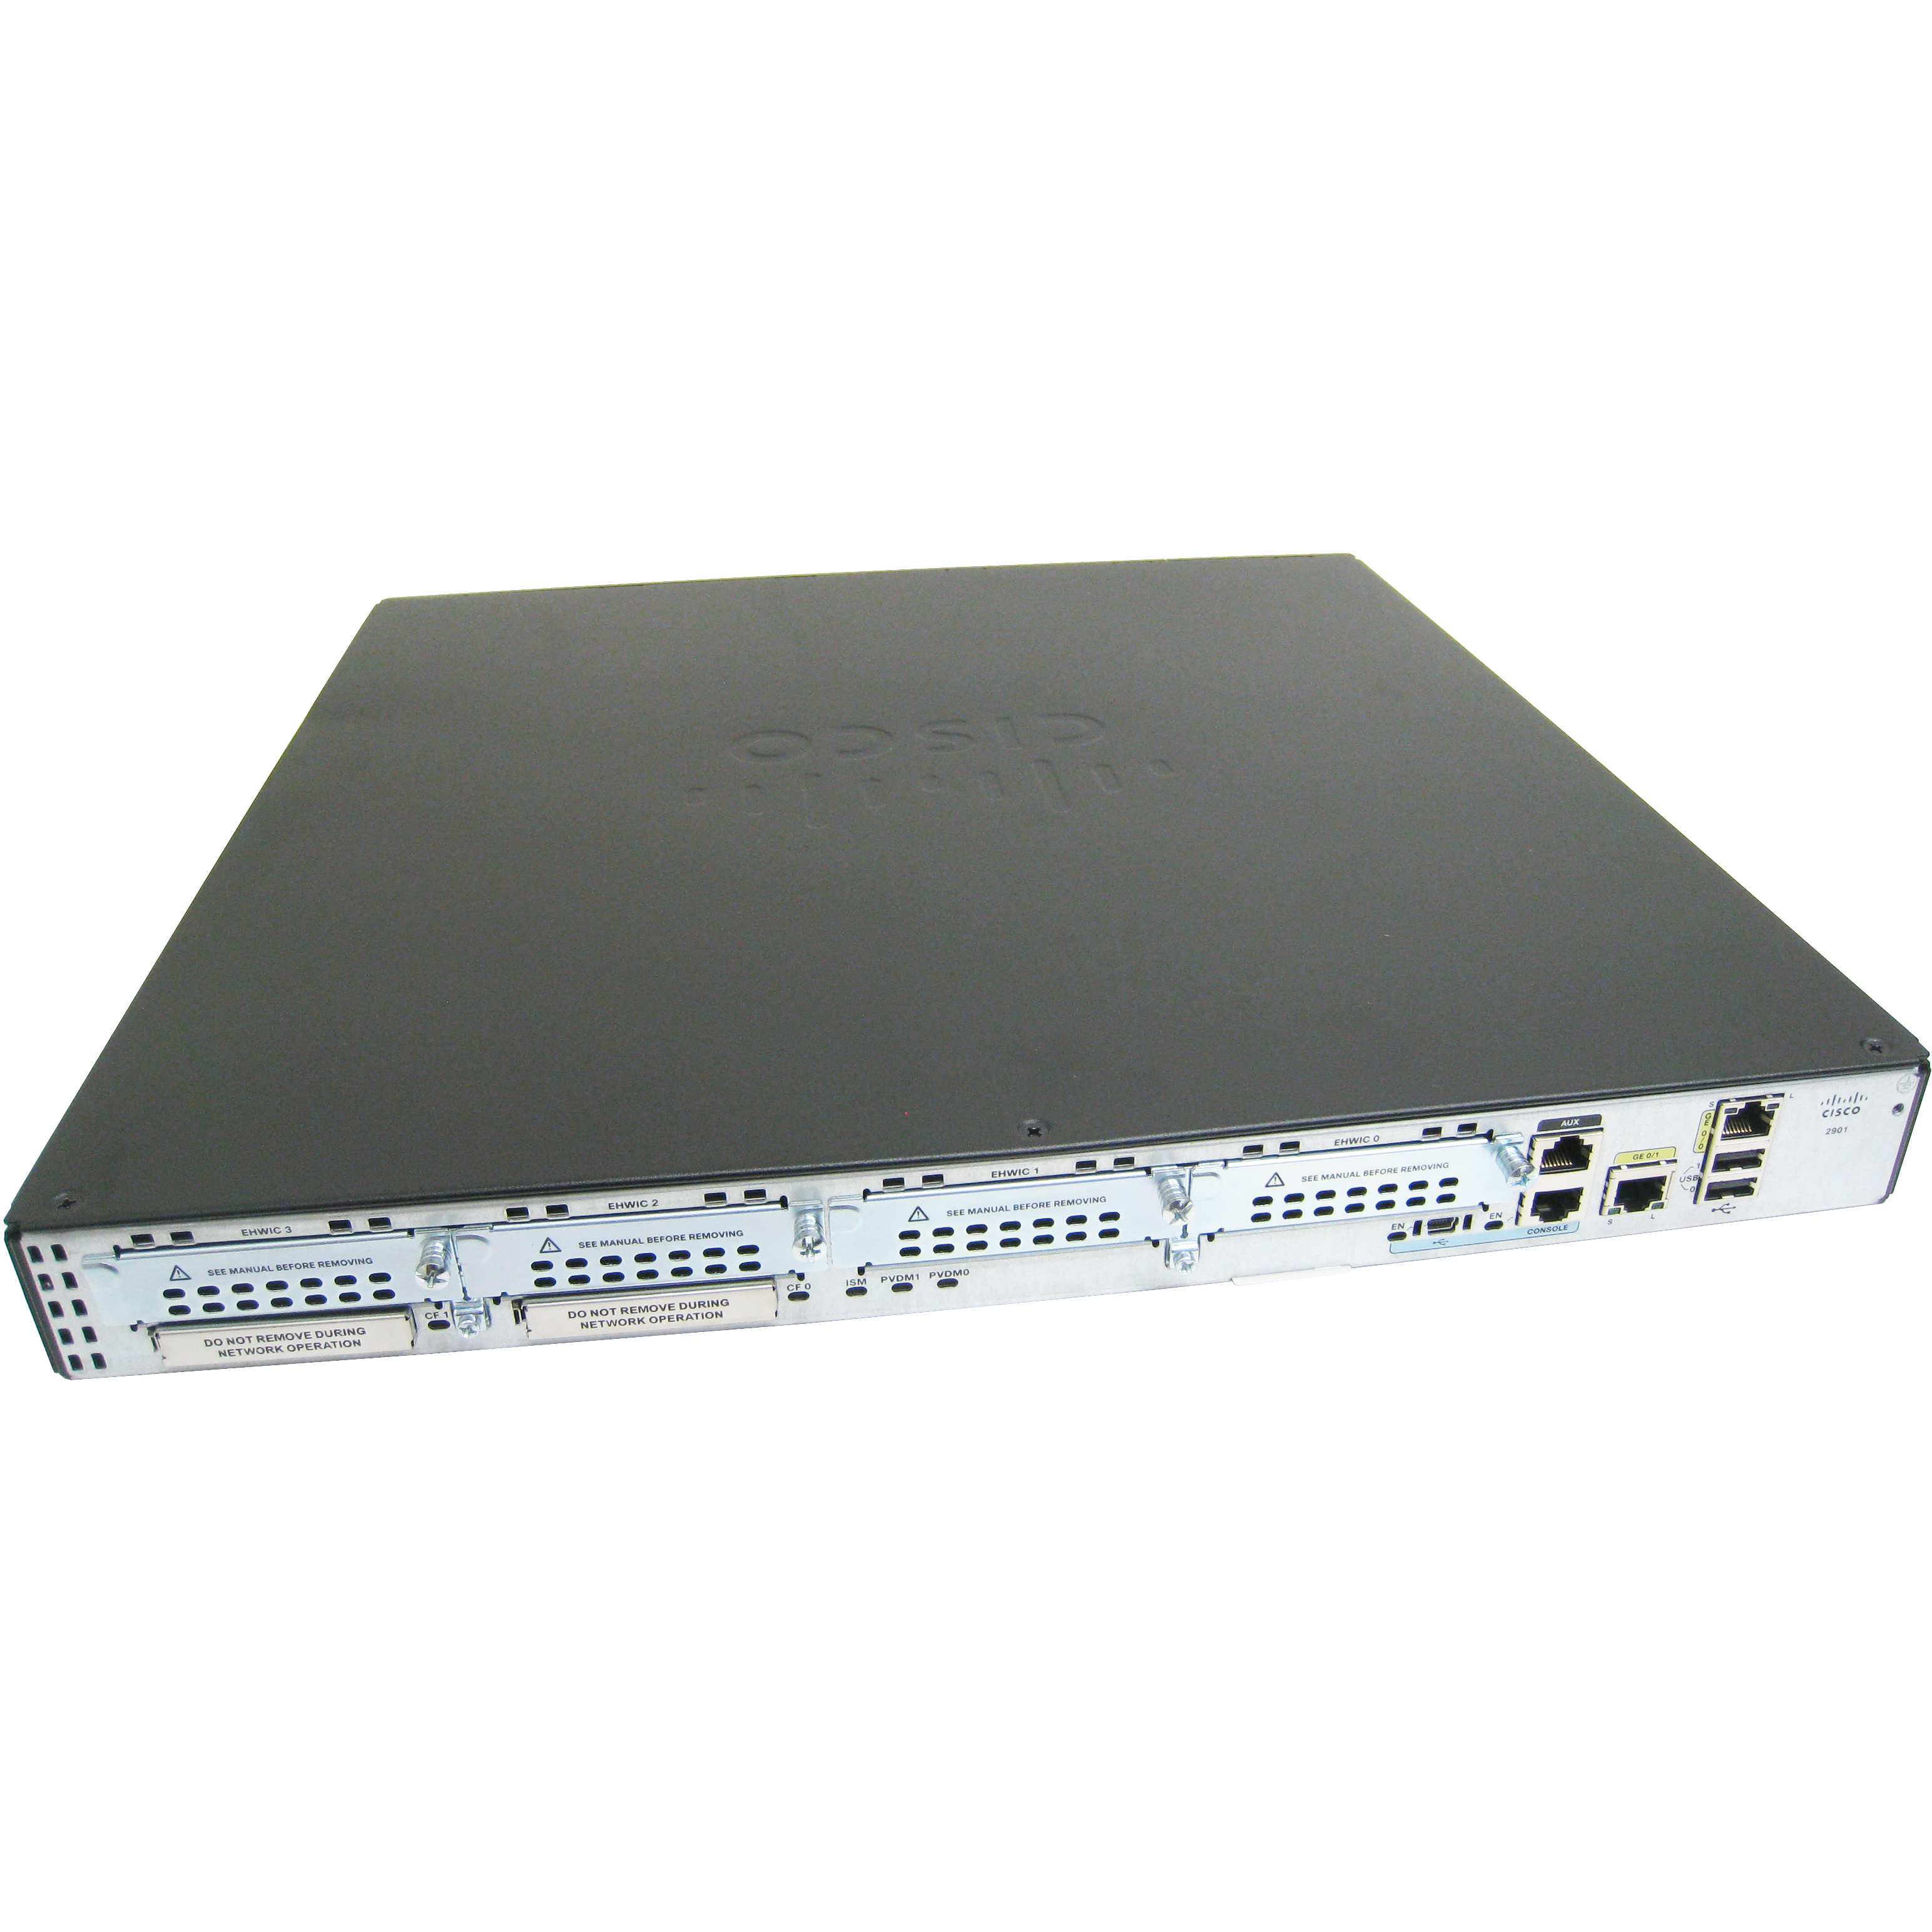 Cisco CISCO2901-HSEC+/K9